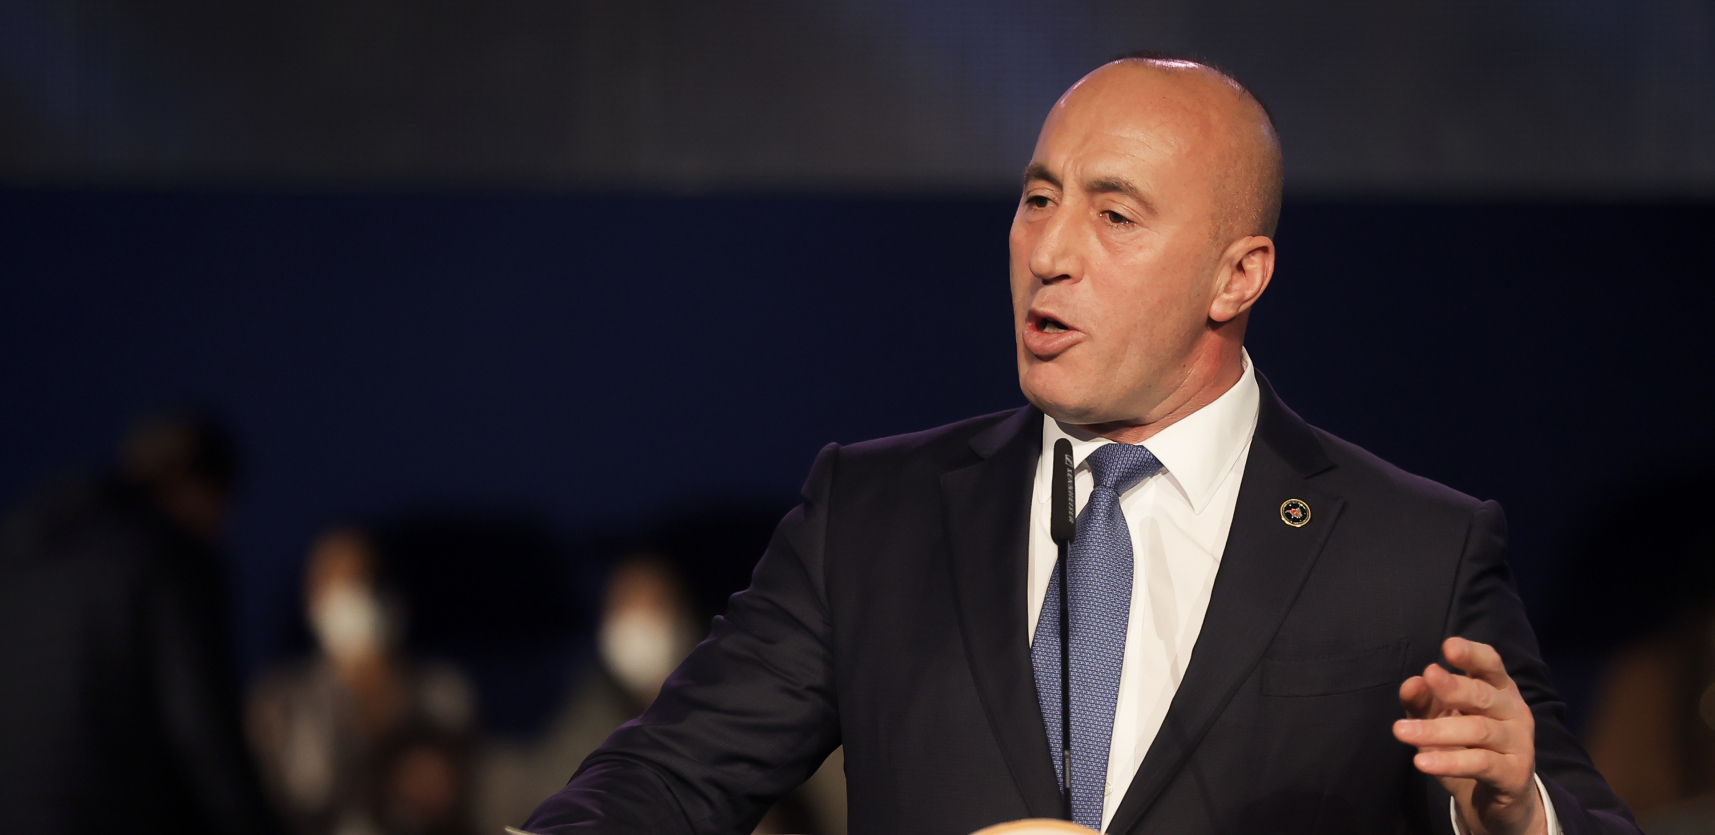 Haradinaj: Postoji sumnja da će Kurti da podeli Kosovo da bi izbegao ZSO